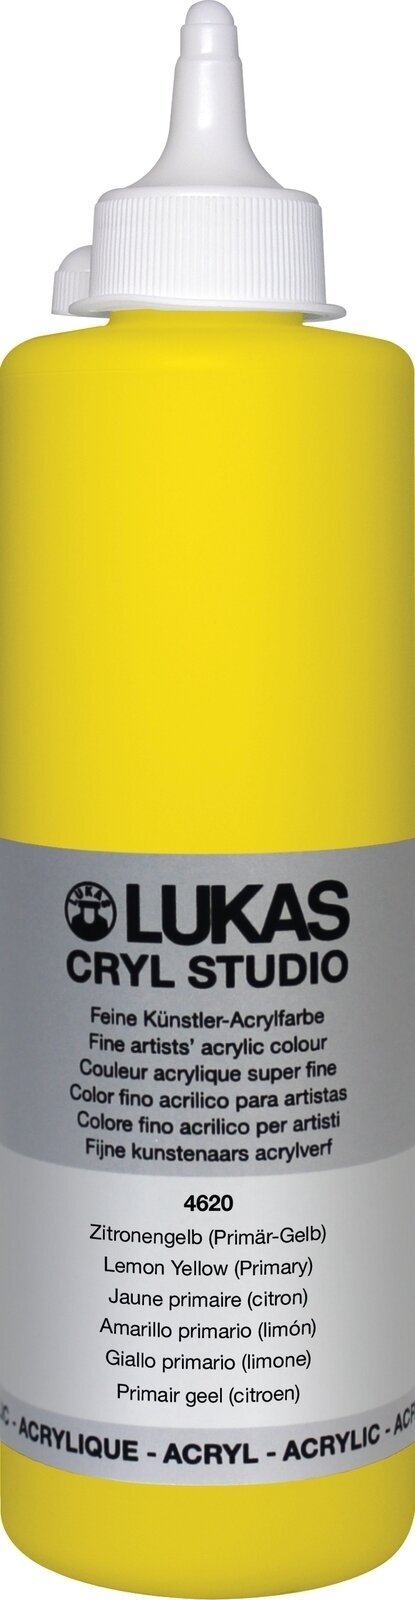 Peinture acrylique Lukas Cryl Studio Acrylic Paint Plastic Bottle Peinture acrylique Lemon Yellow (Primary) 500 ml 1 pc